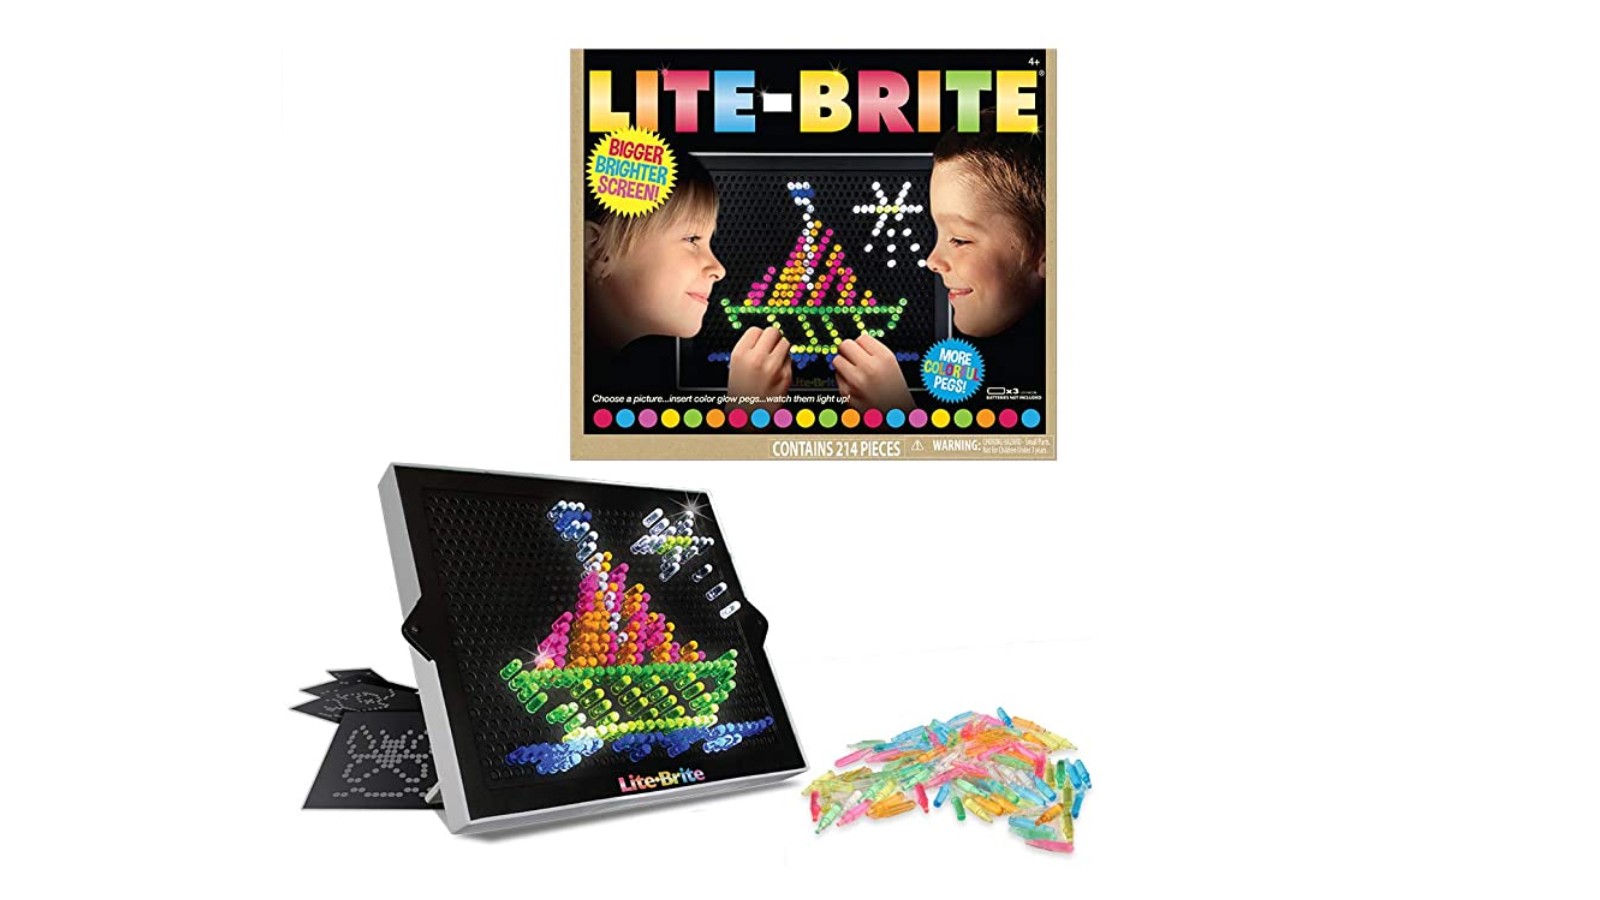 Lite-Brite ultimate classic retro toy